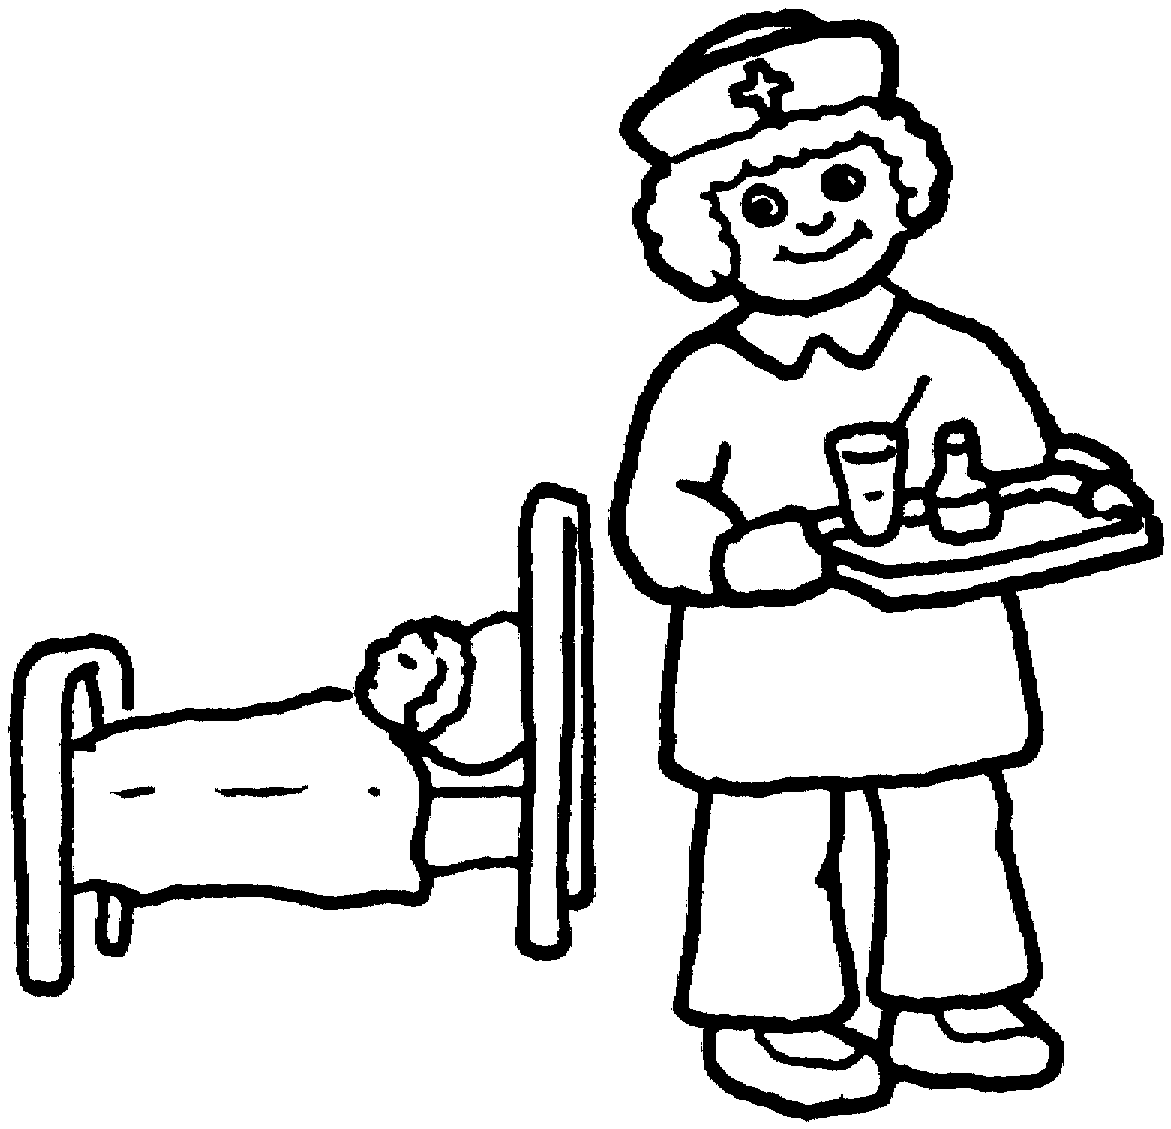 Pictures Of Black Nurses | Free Download Clip Art | Free Clip Art ...